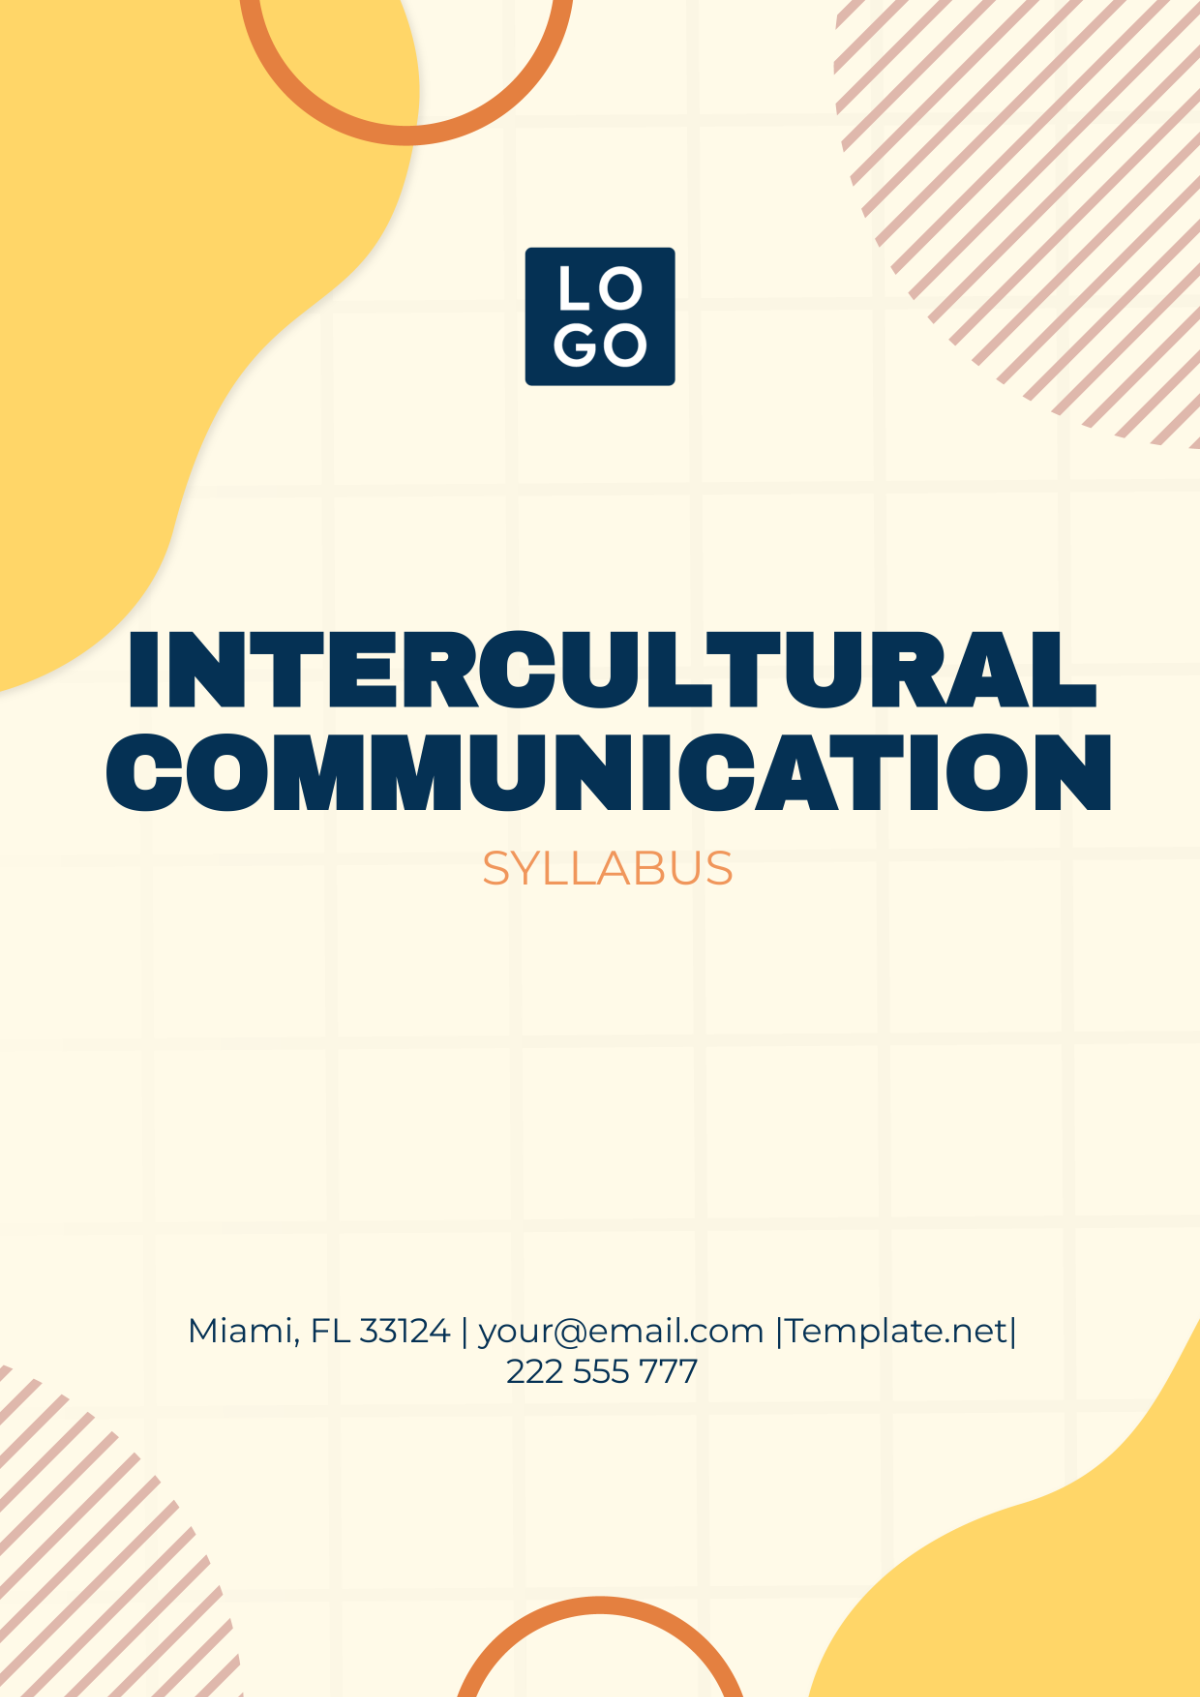 Intercultural Communication Syllabus Template